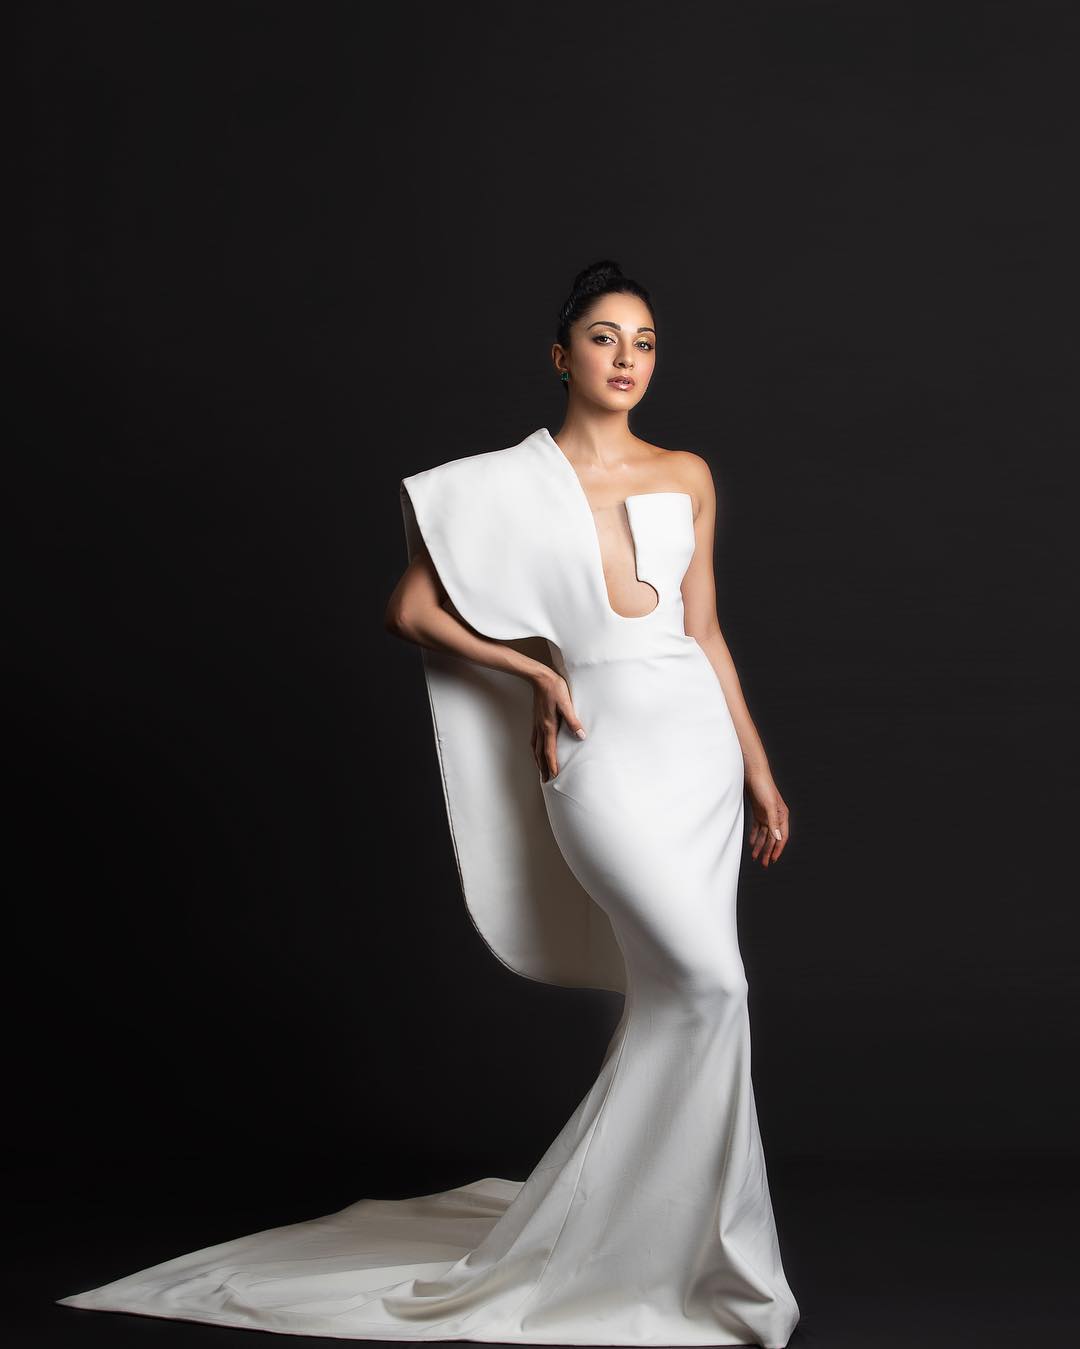 Kiara Advani looks statusque in the white sculpted gown